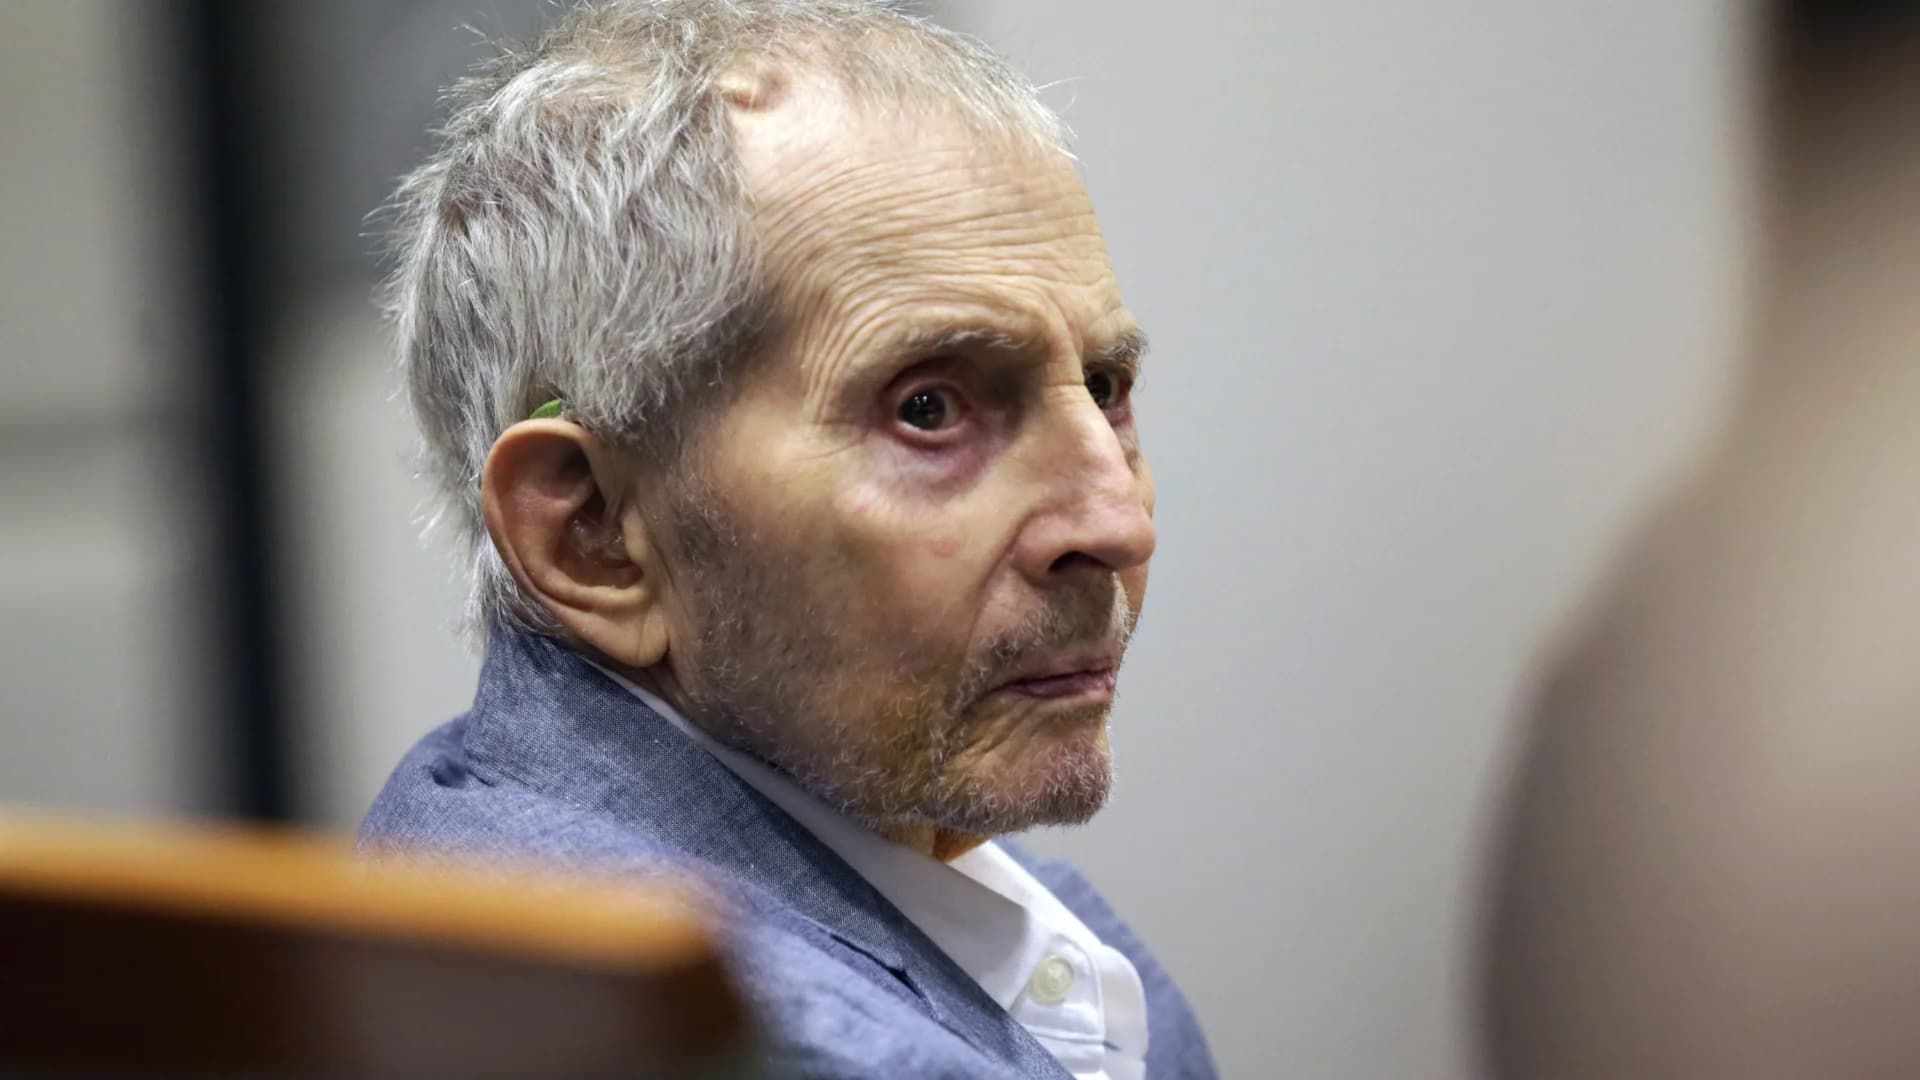 Robert Durst murder trial resumes May 17 after virus delay